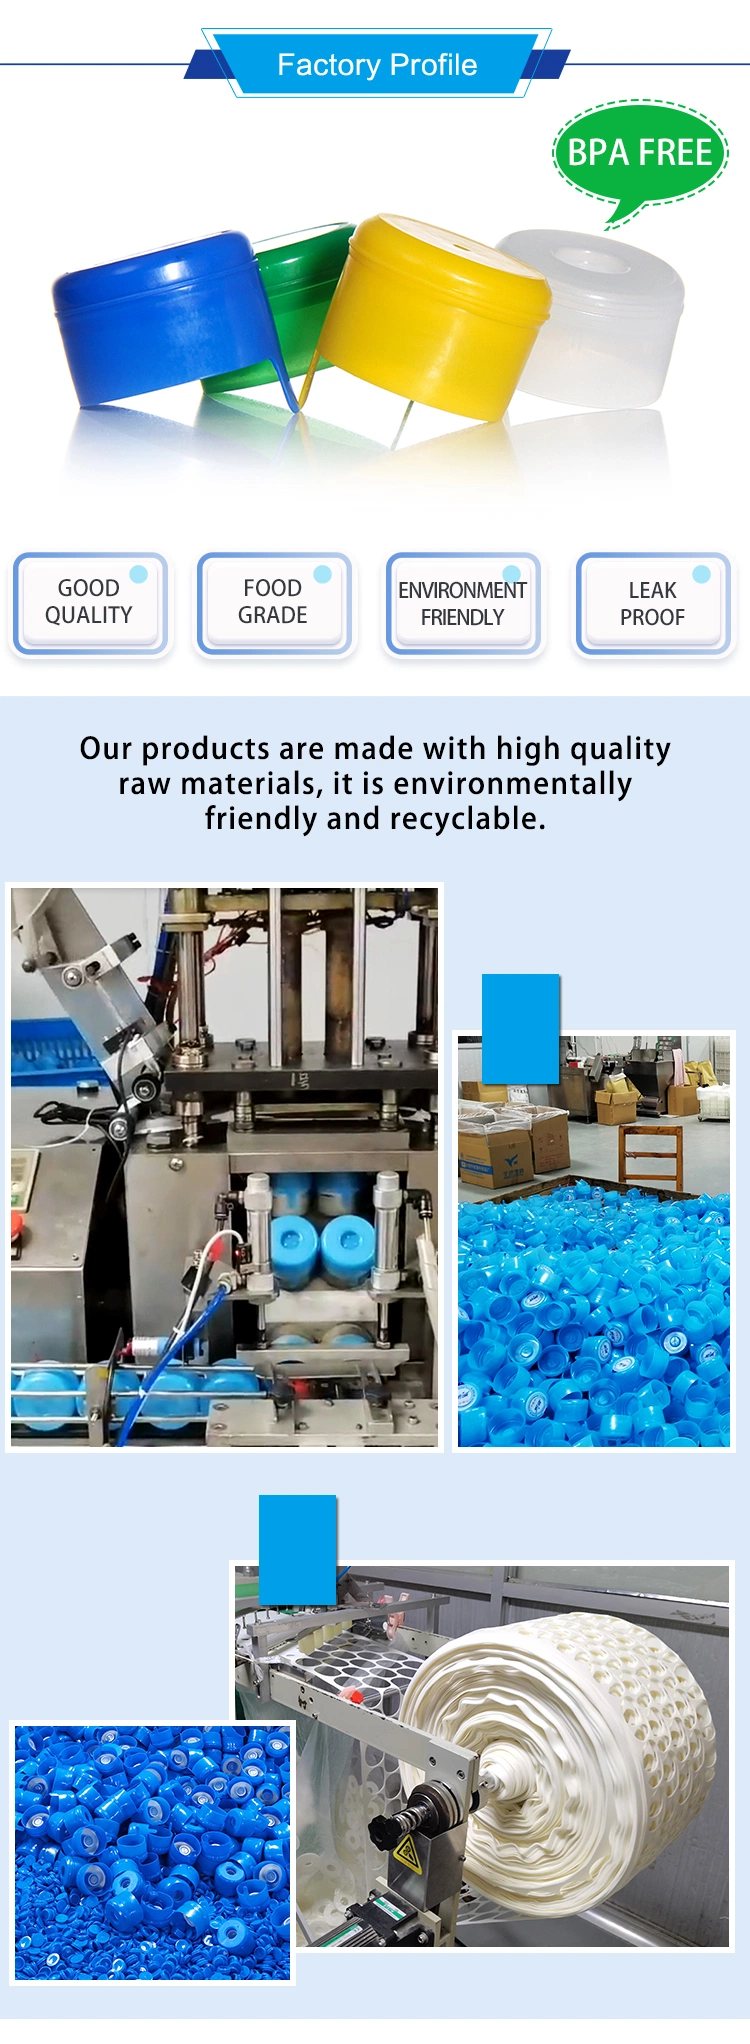 Factory Supply Plastic Water Bottle Caps 55mm 5 Gallon Seal Cap